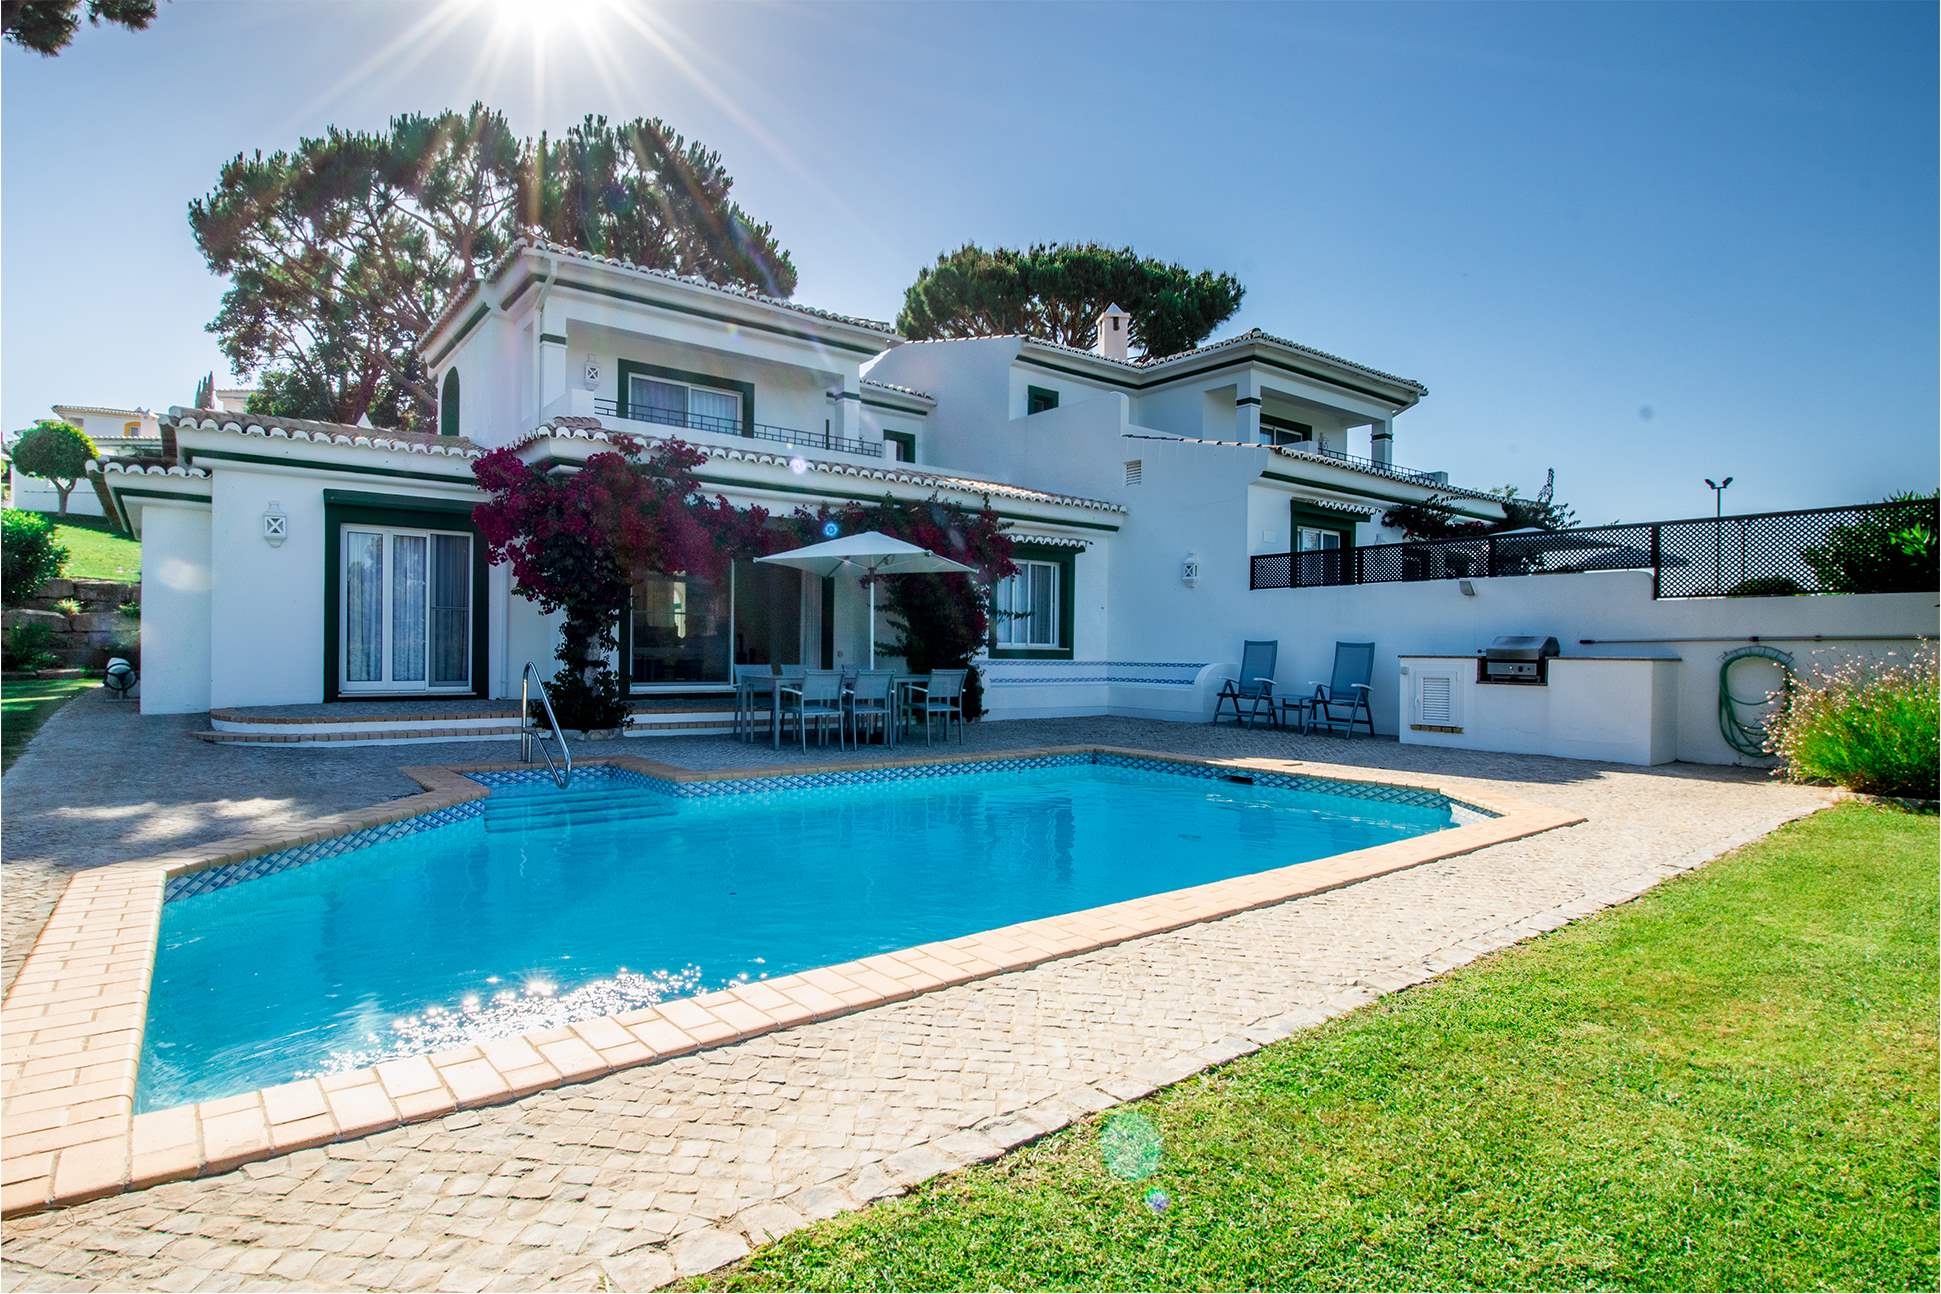 Four Seasons Fairways 2 Bed Cluster Villa + Study, Saturday Arrival, 2 bedroom villa in Four Seasons Fairways, Algarve